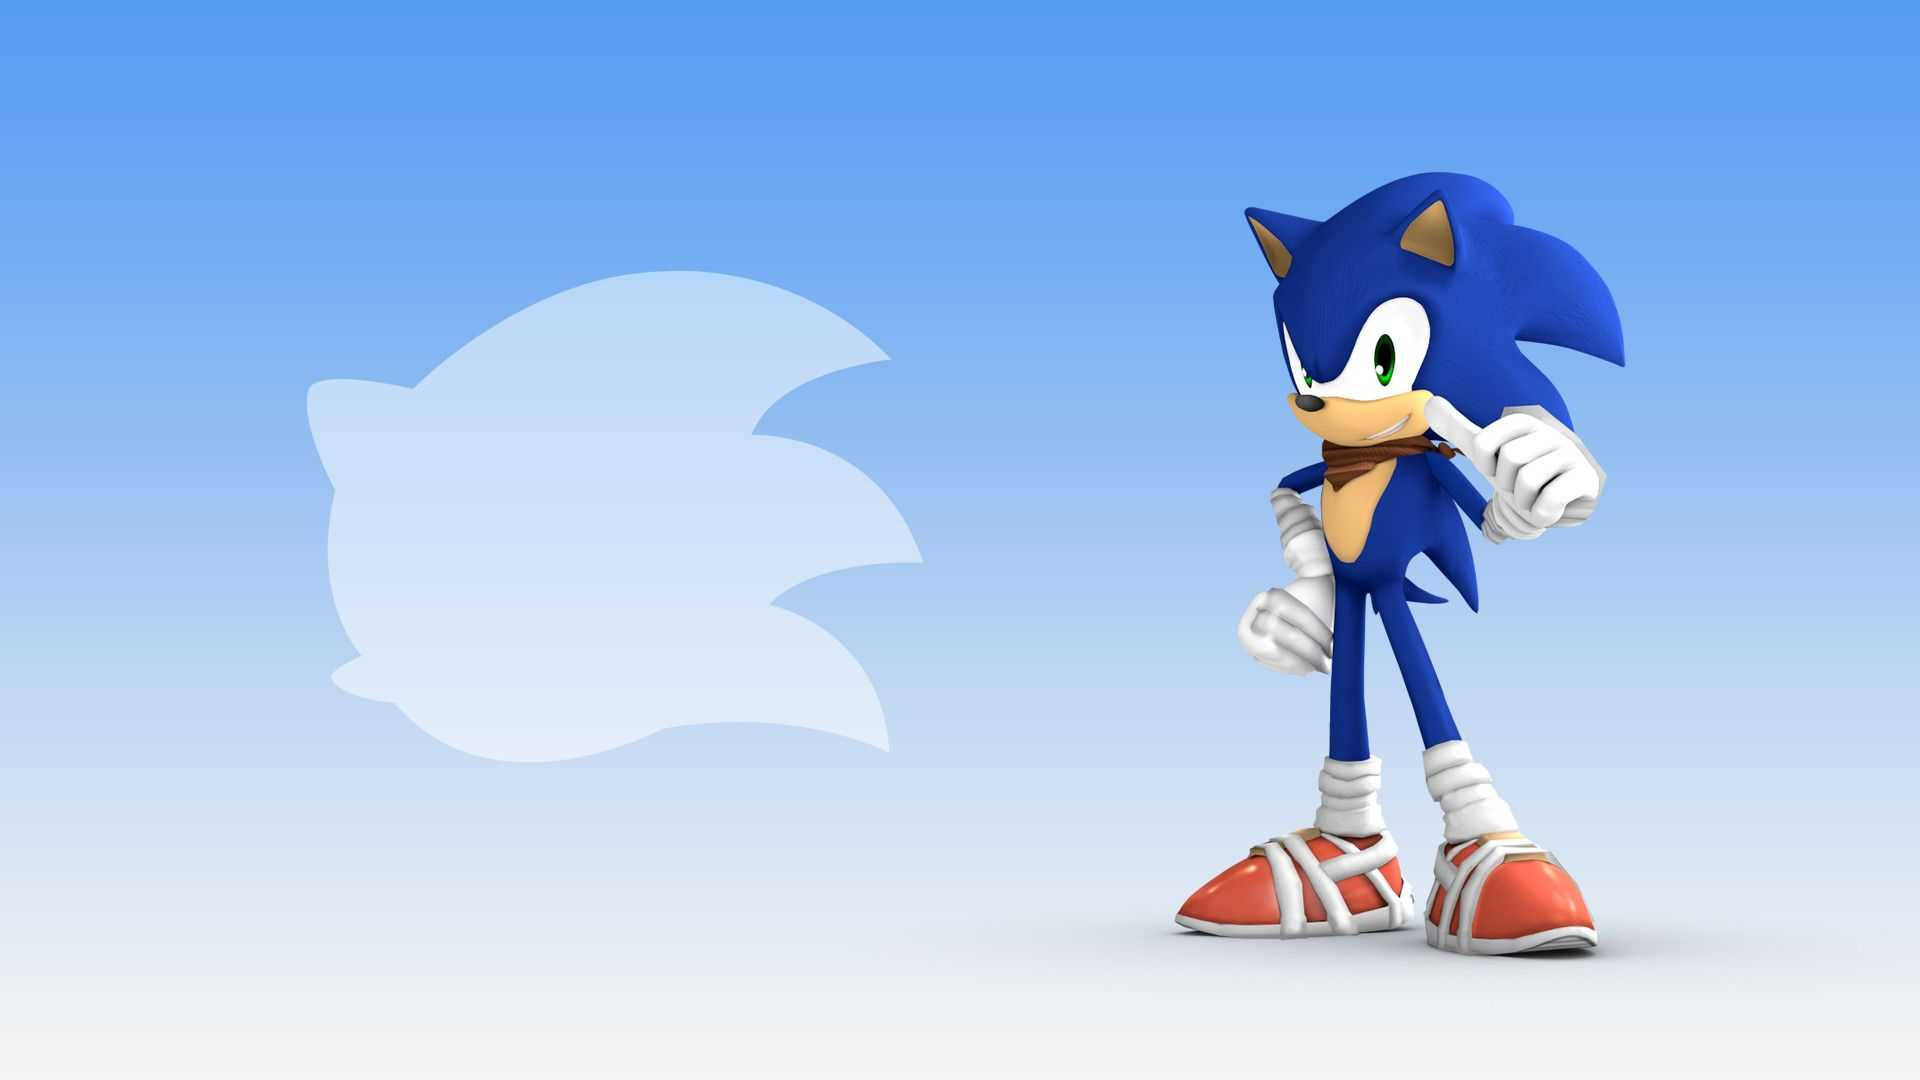 Sonic the Hedgehog Movie Poster 4K Wallpaper 71180